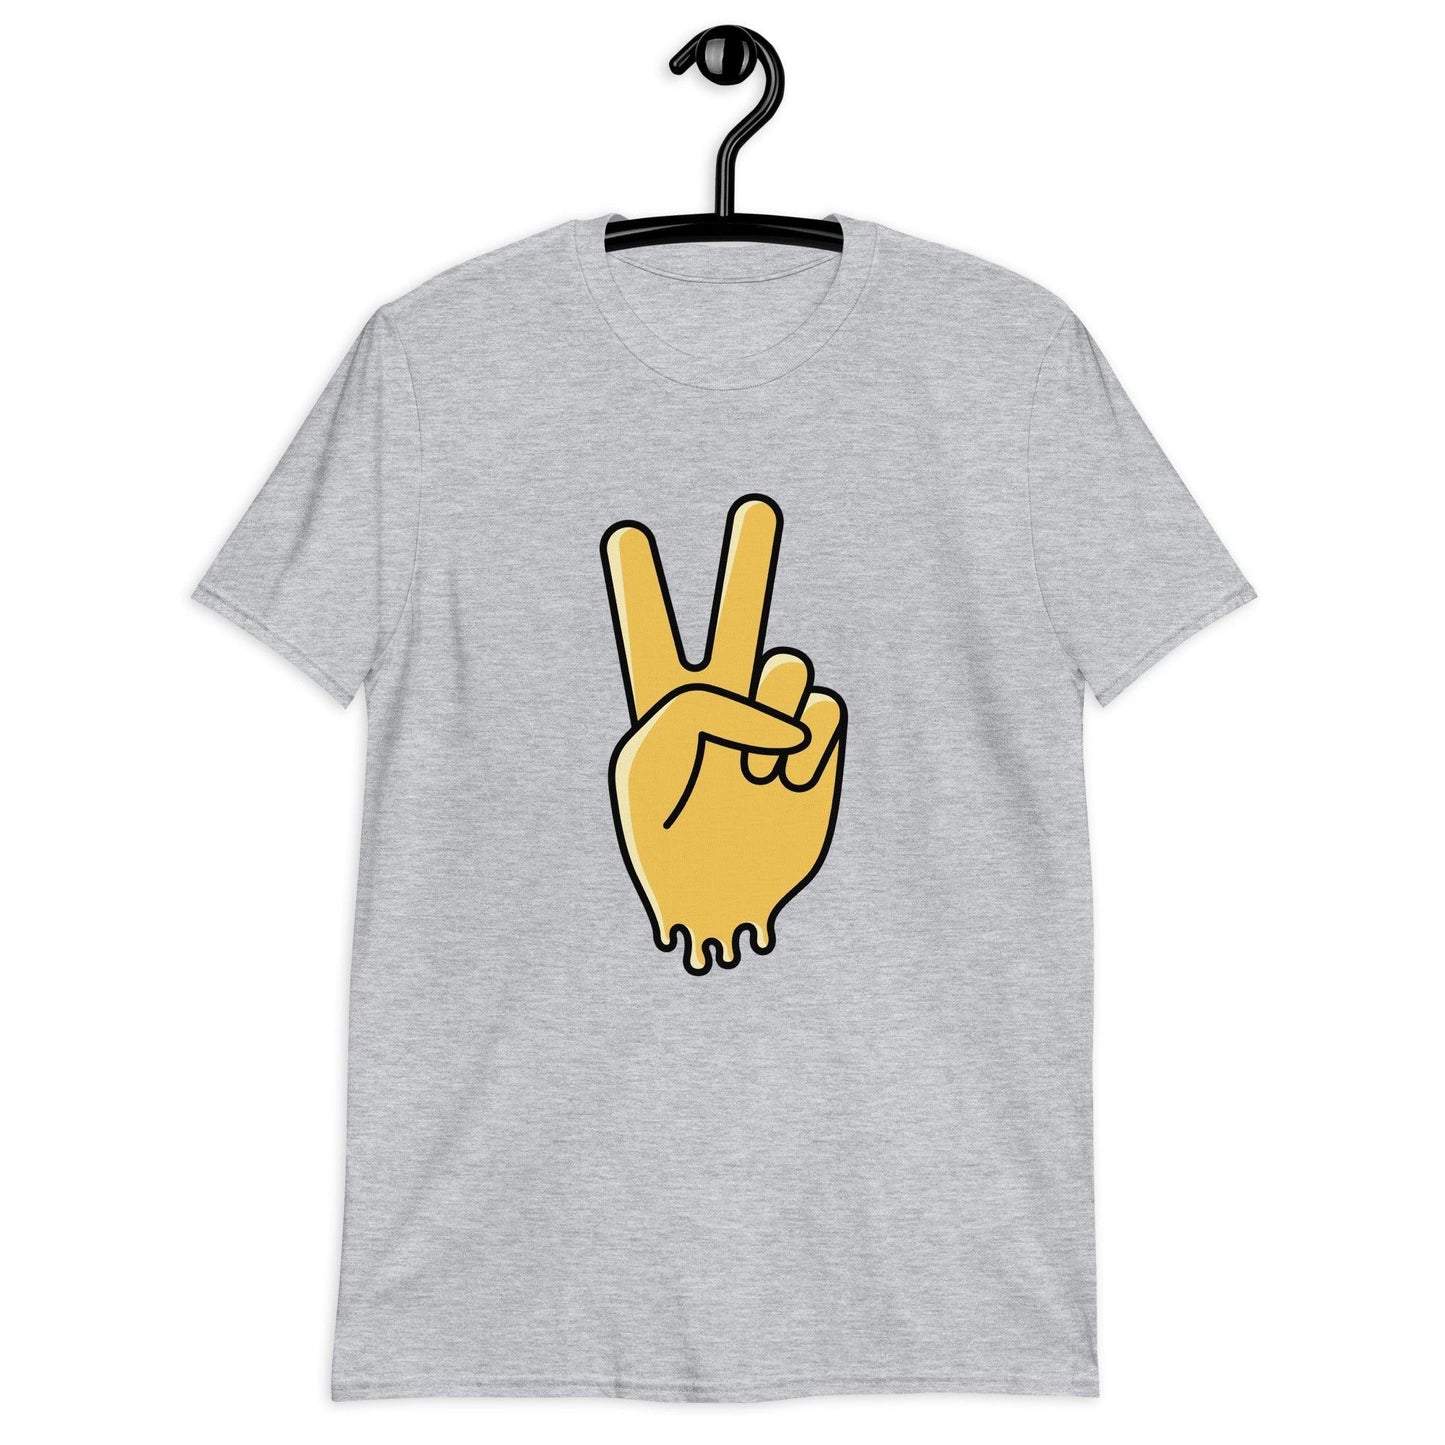 Radiate Harmony: Melting Peace Short Sleeve Unisex T-Shirt - A Serene Clothing Essential! - Lizard Vigilante